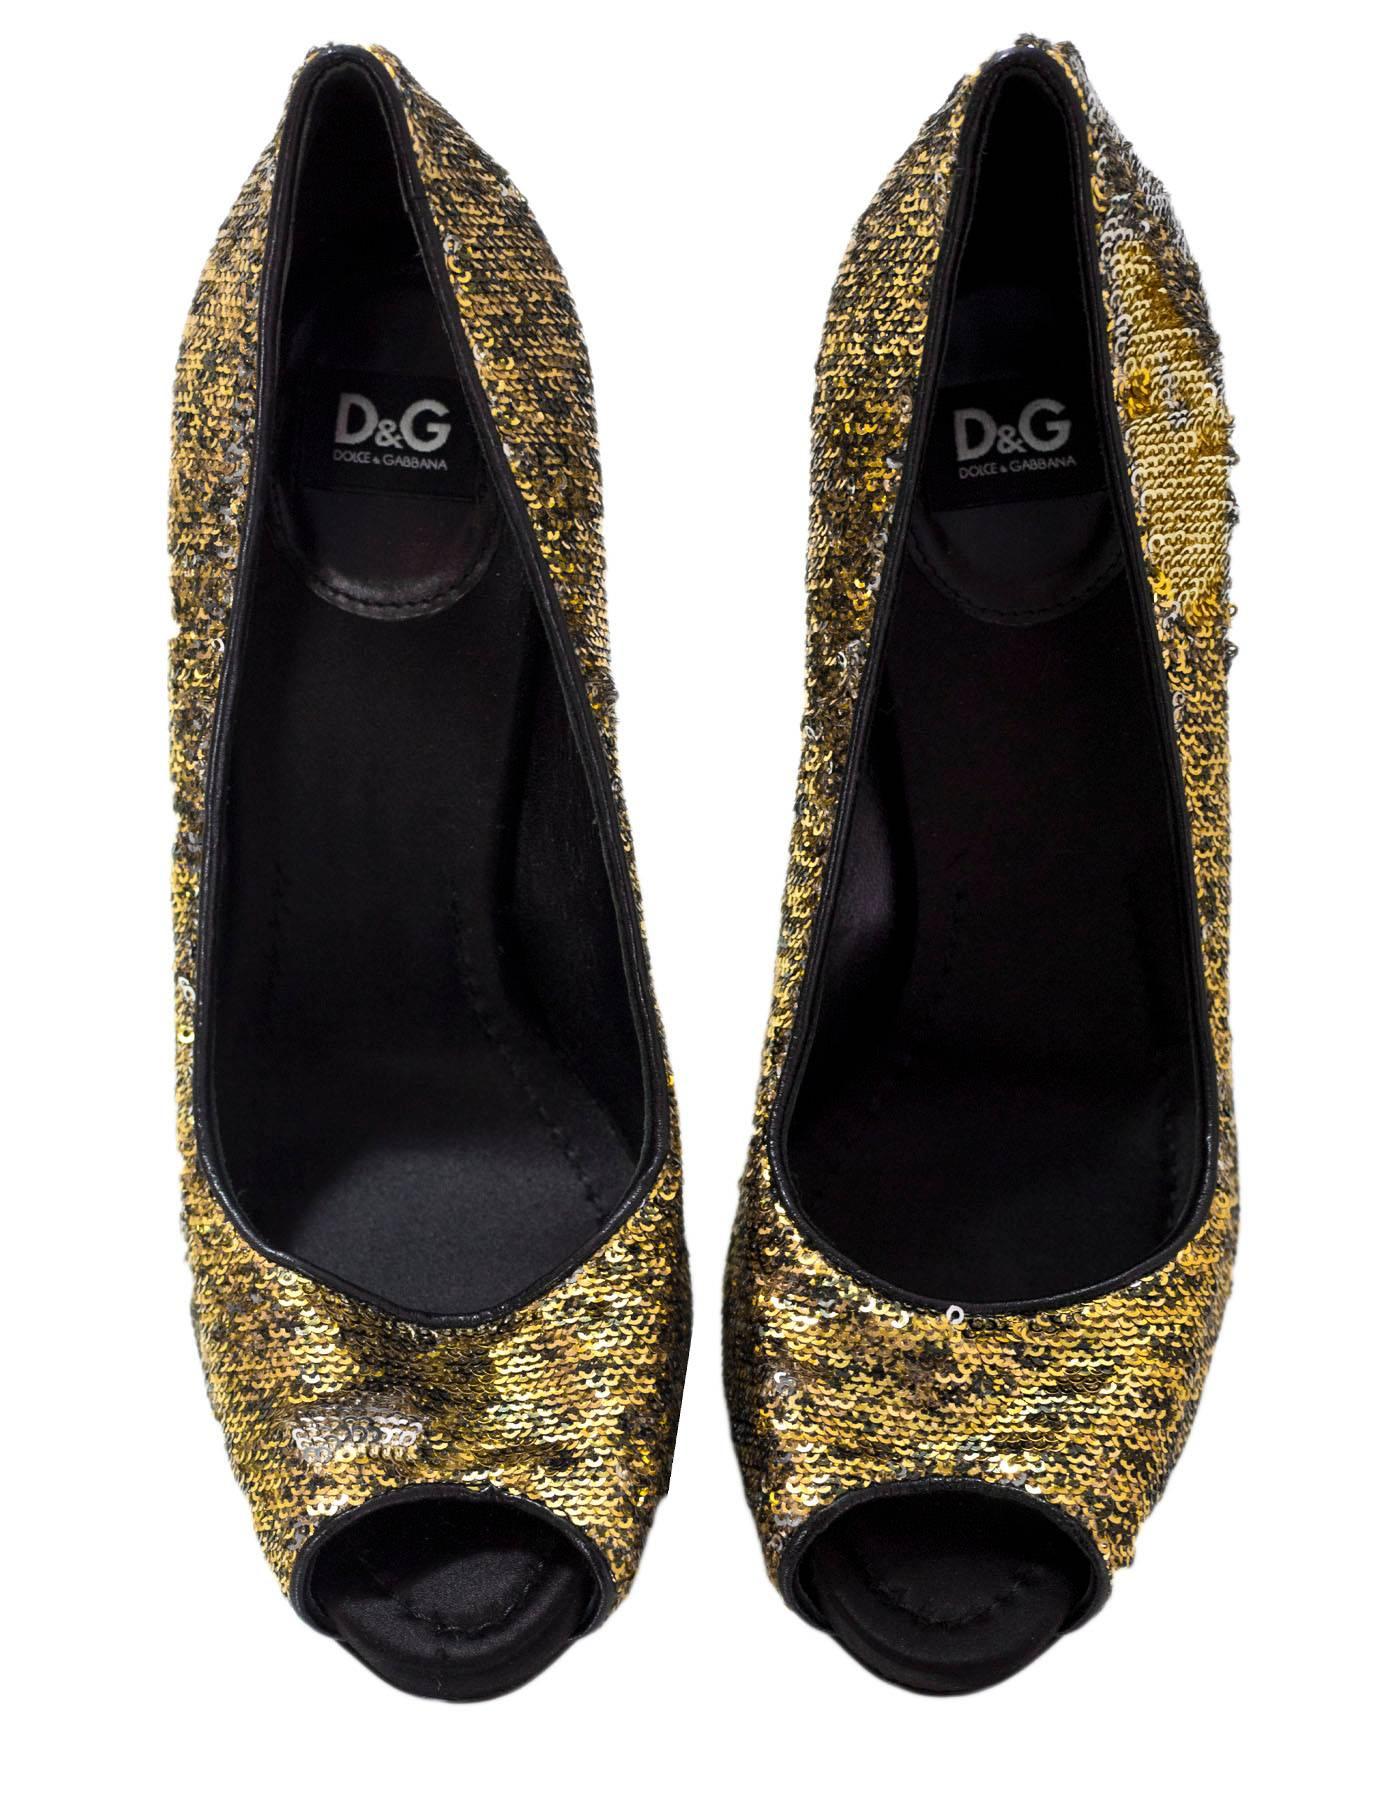 Brown D&G Dolce & Gabbana Gold Sequin Pee-Toe Pumps Size 38